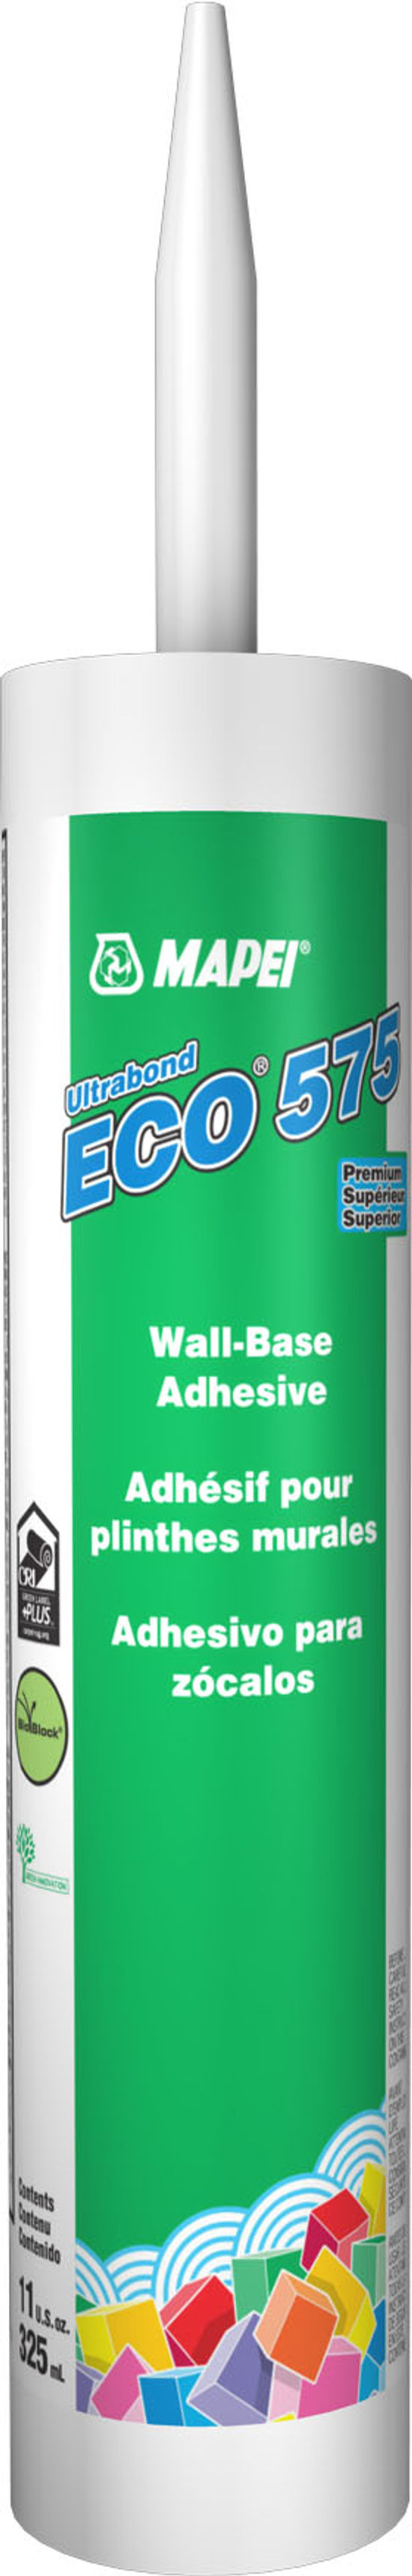 Ultrabond ECO 575 Premium Wall-Base Adhesive - 325 mL